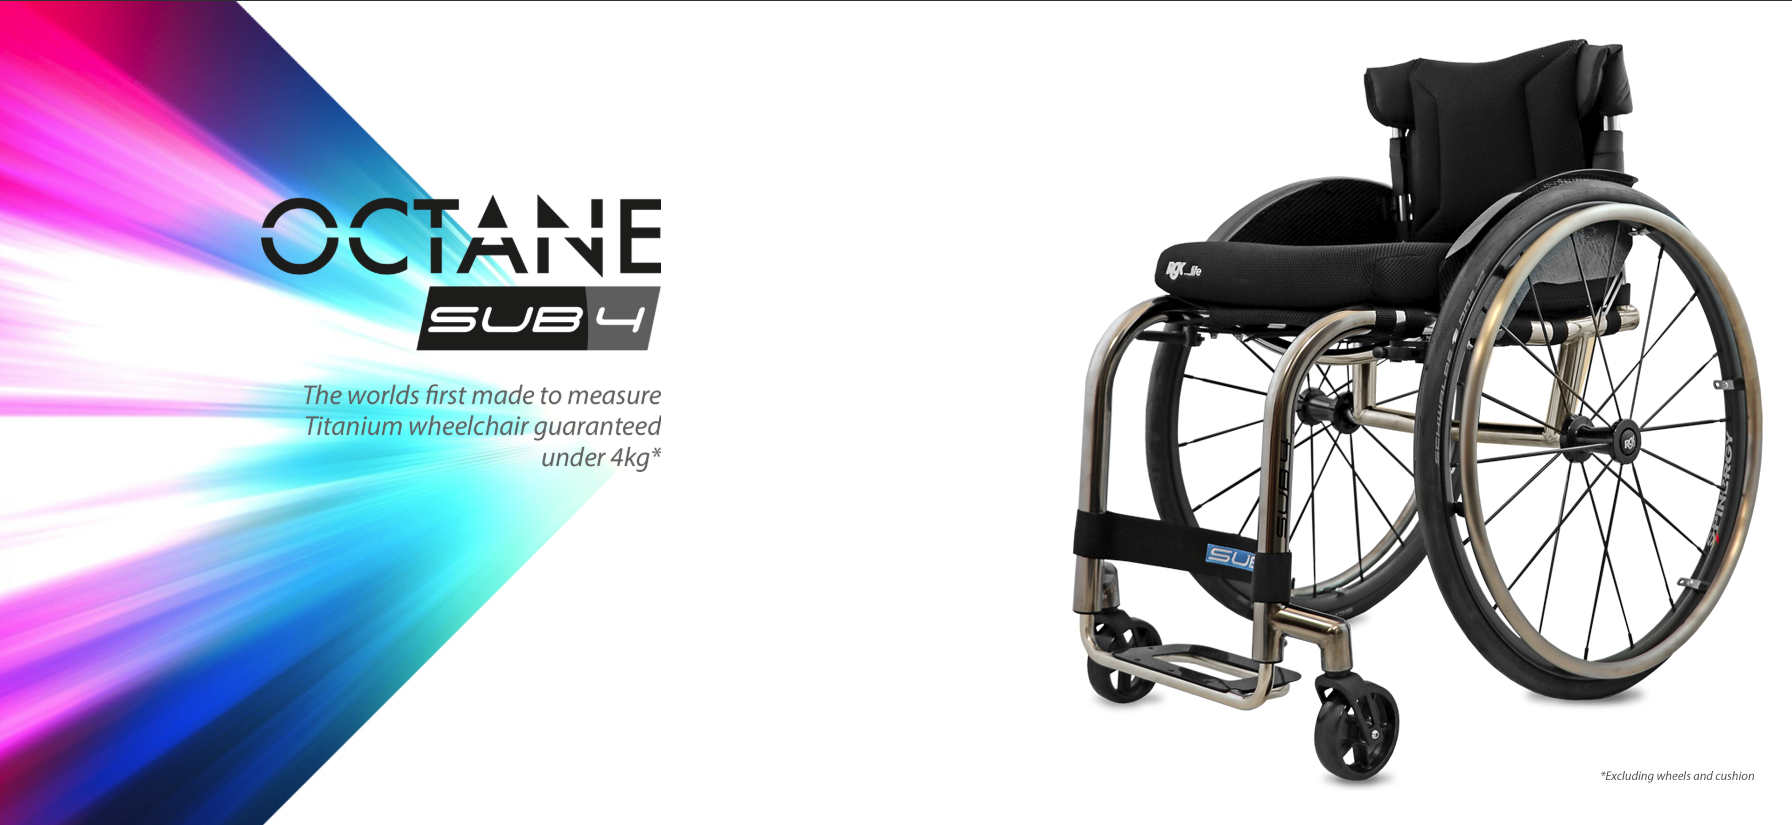 RGK Octane Sub 4 ultralight active wheelchair now available